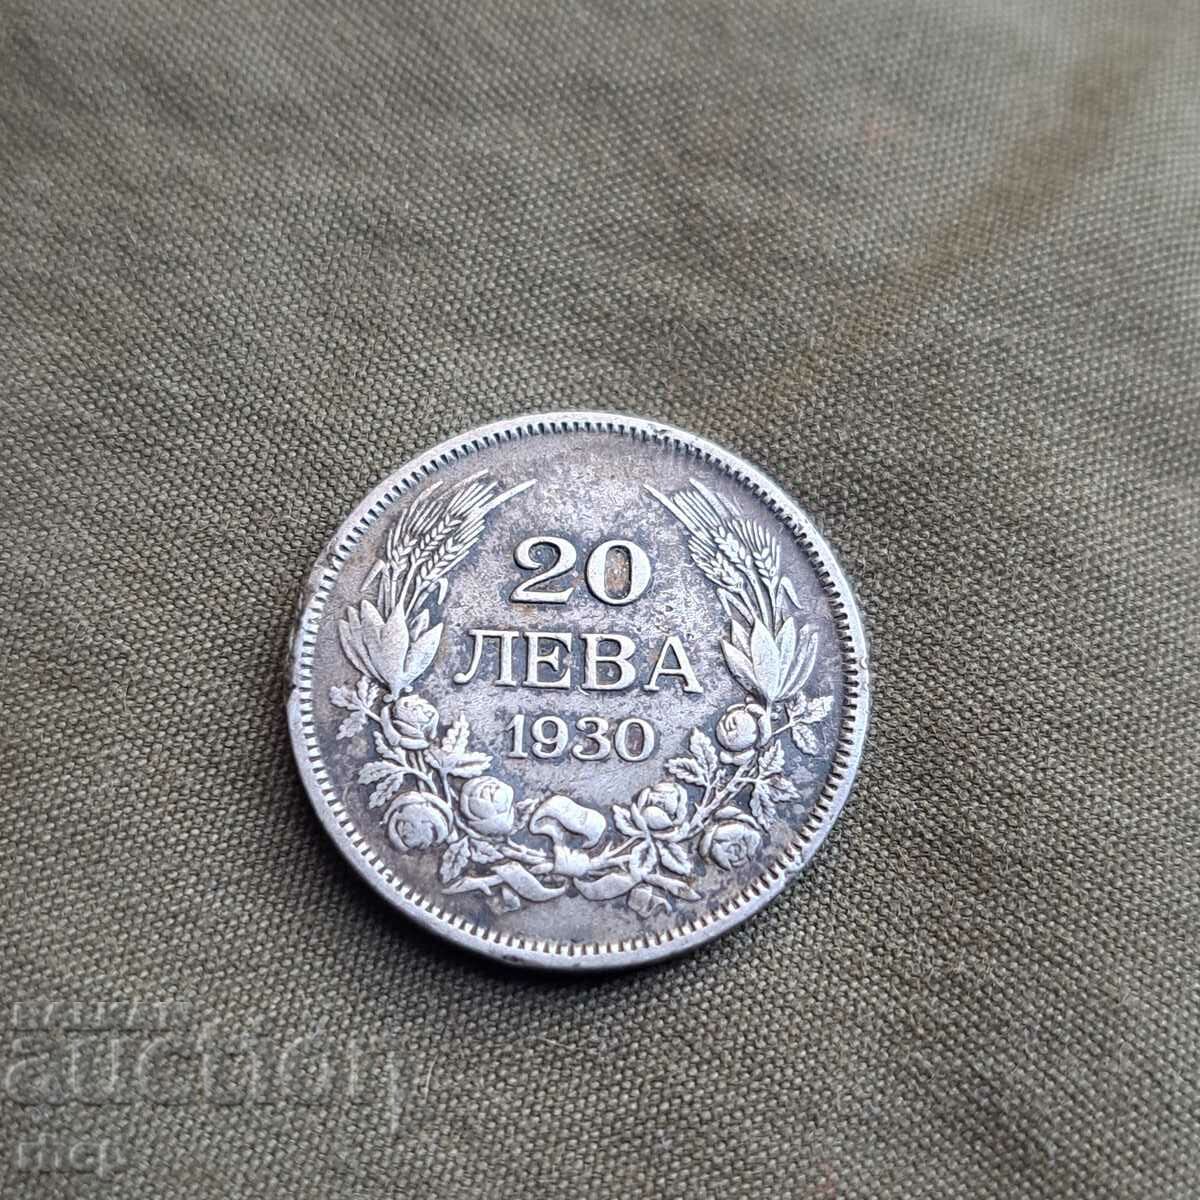 20 BGN 1930 coin